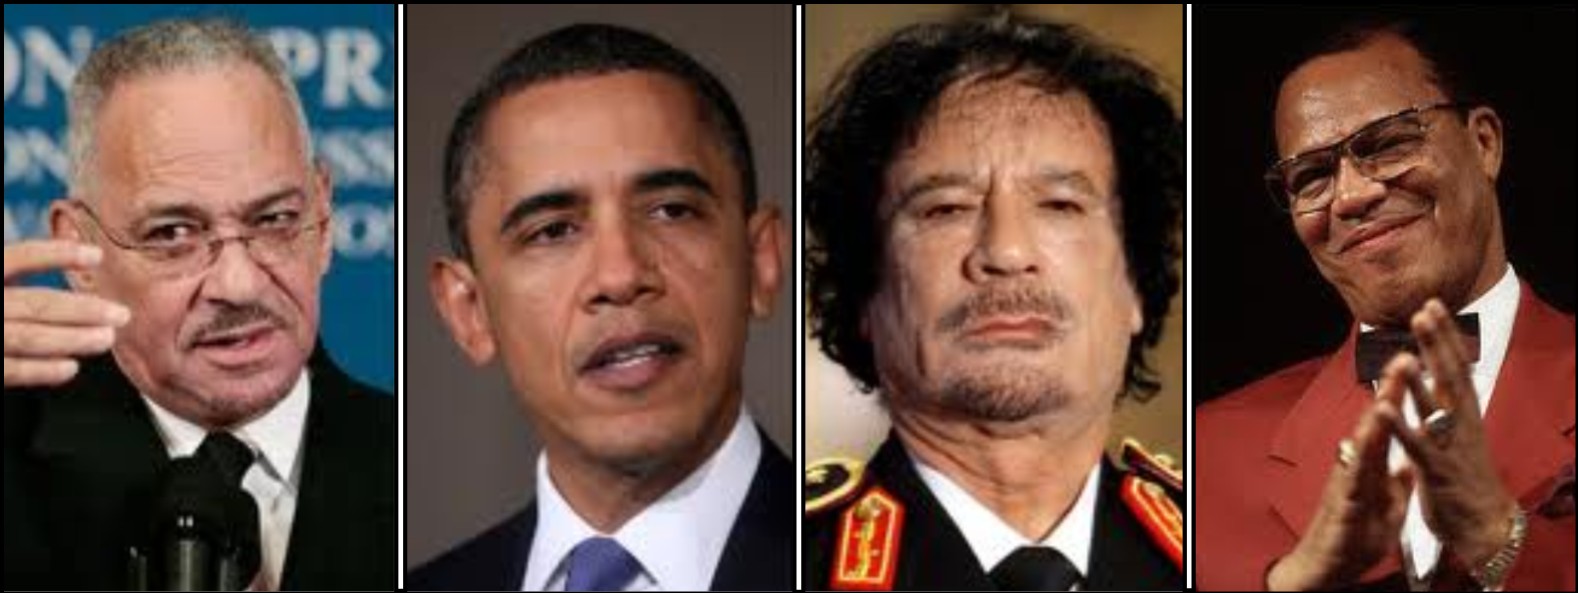 http://presentdiscontent.files.wordpress.com/2011/02/obama-wright-gaddafi-farrakhan.jpg